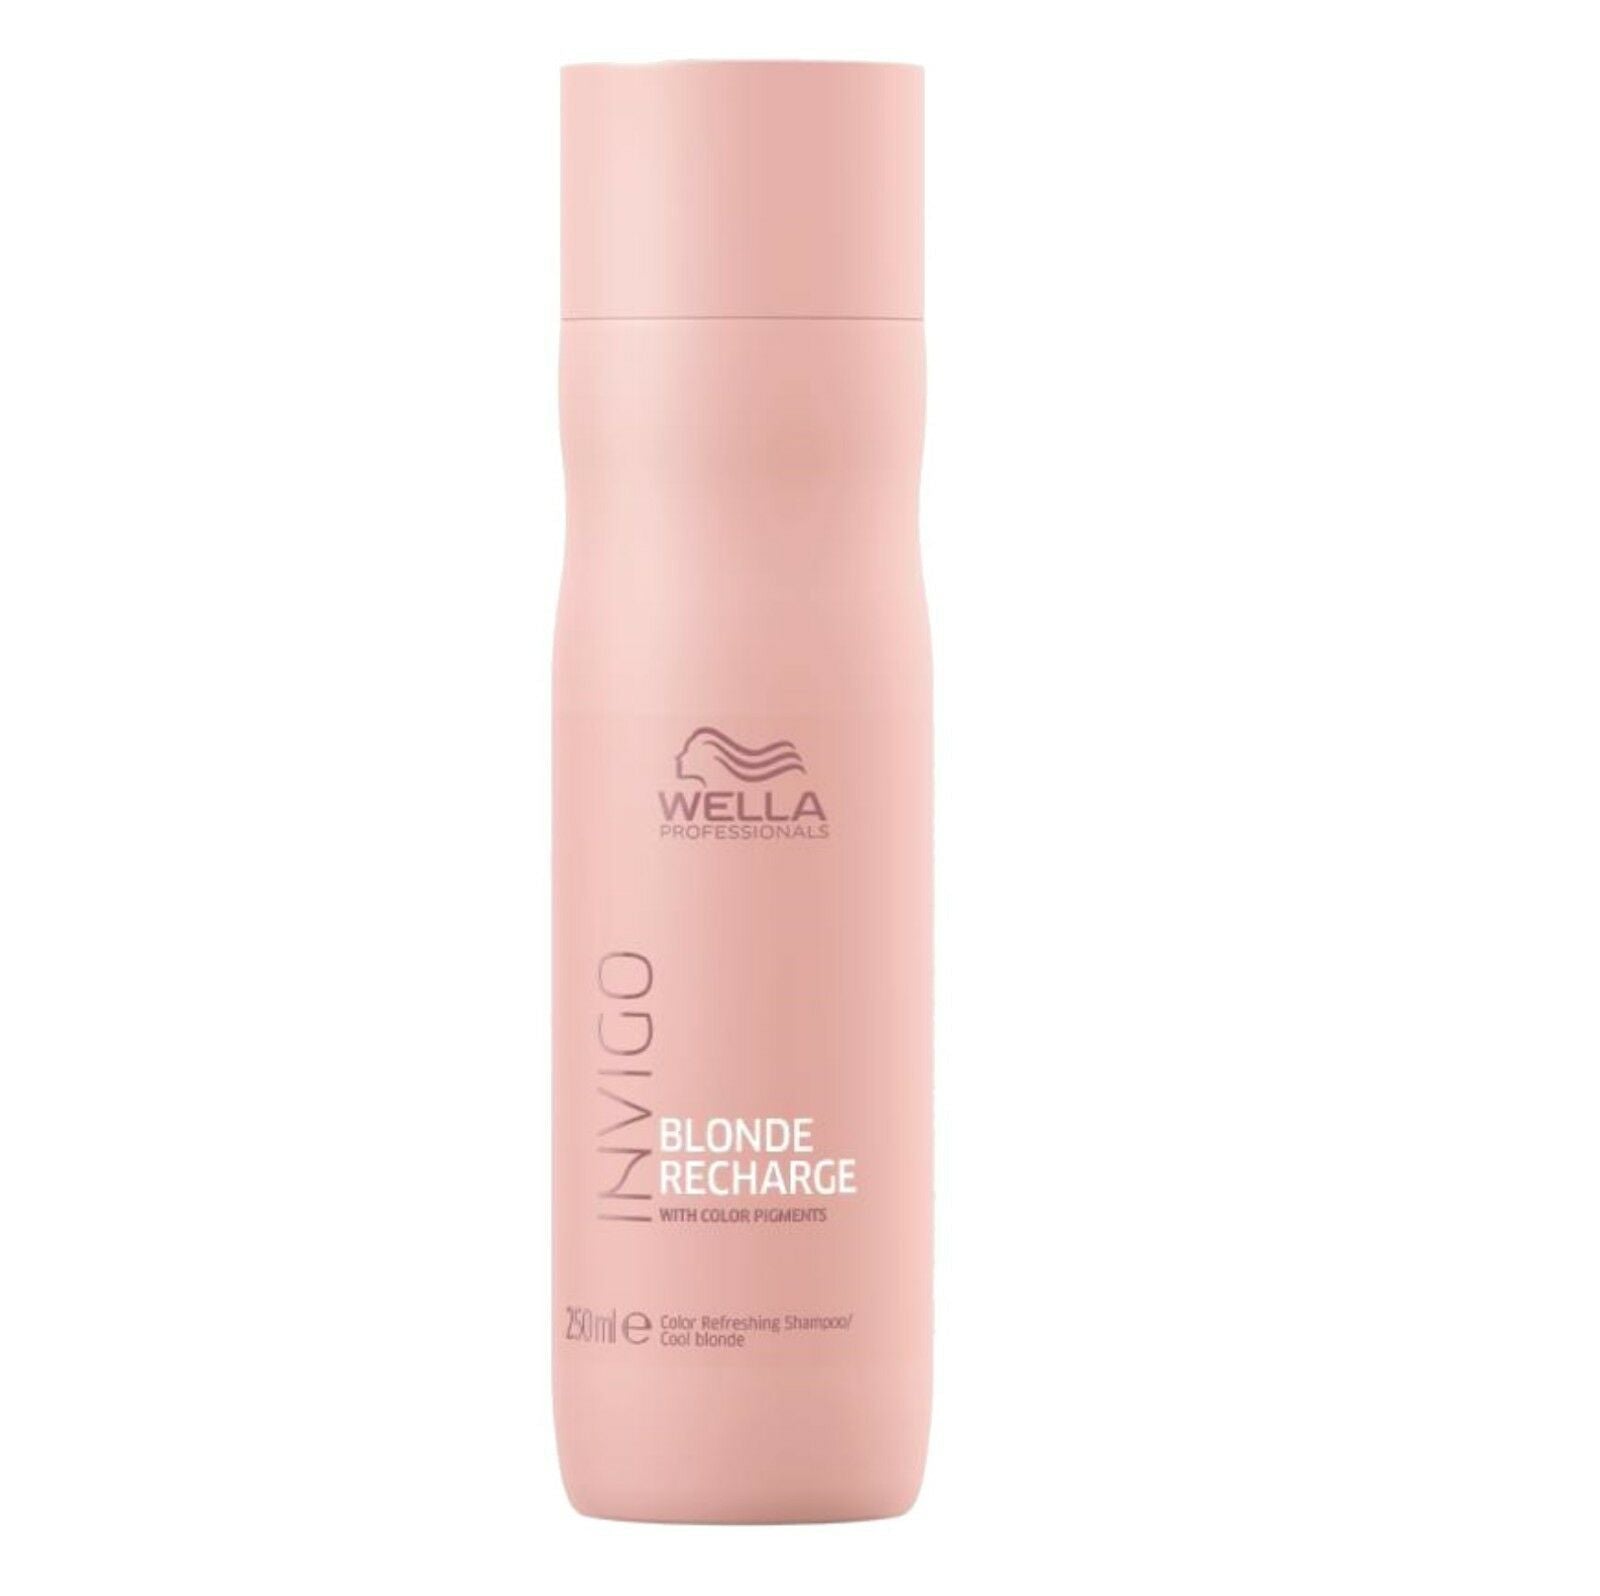 Wella Professionals Invigo Blonde Recharge Cool Blonde Refreshing Shampoo Conditioner Duo - On Line Hair Depot